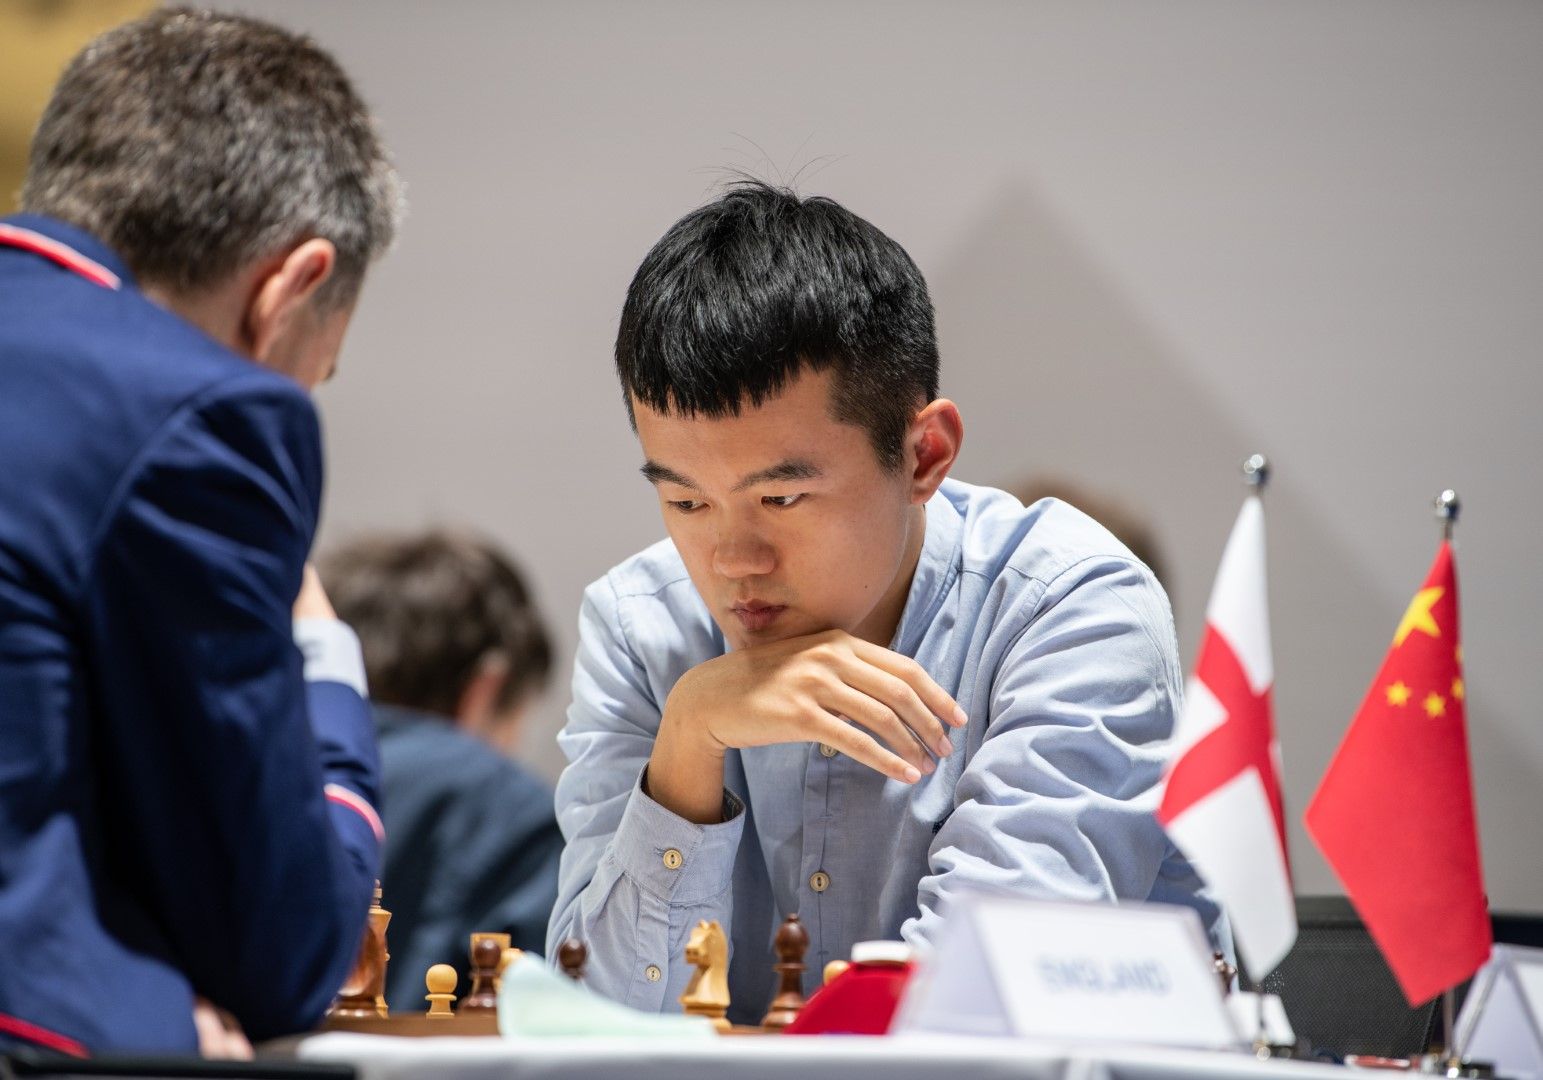 Russia, China Win World Team Chess Championships - Chess.com